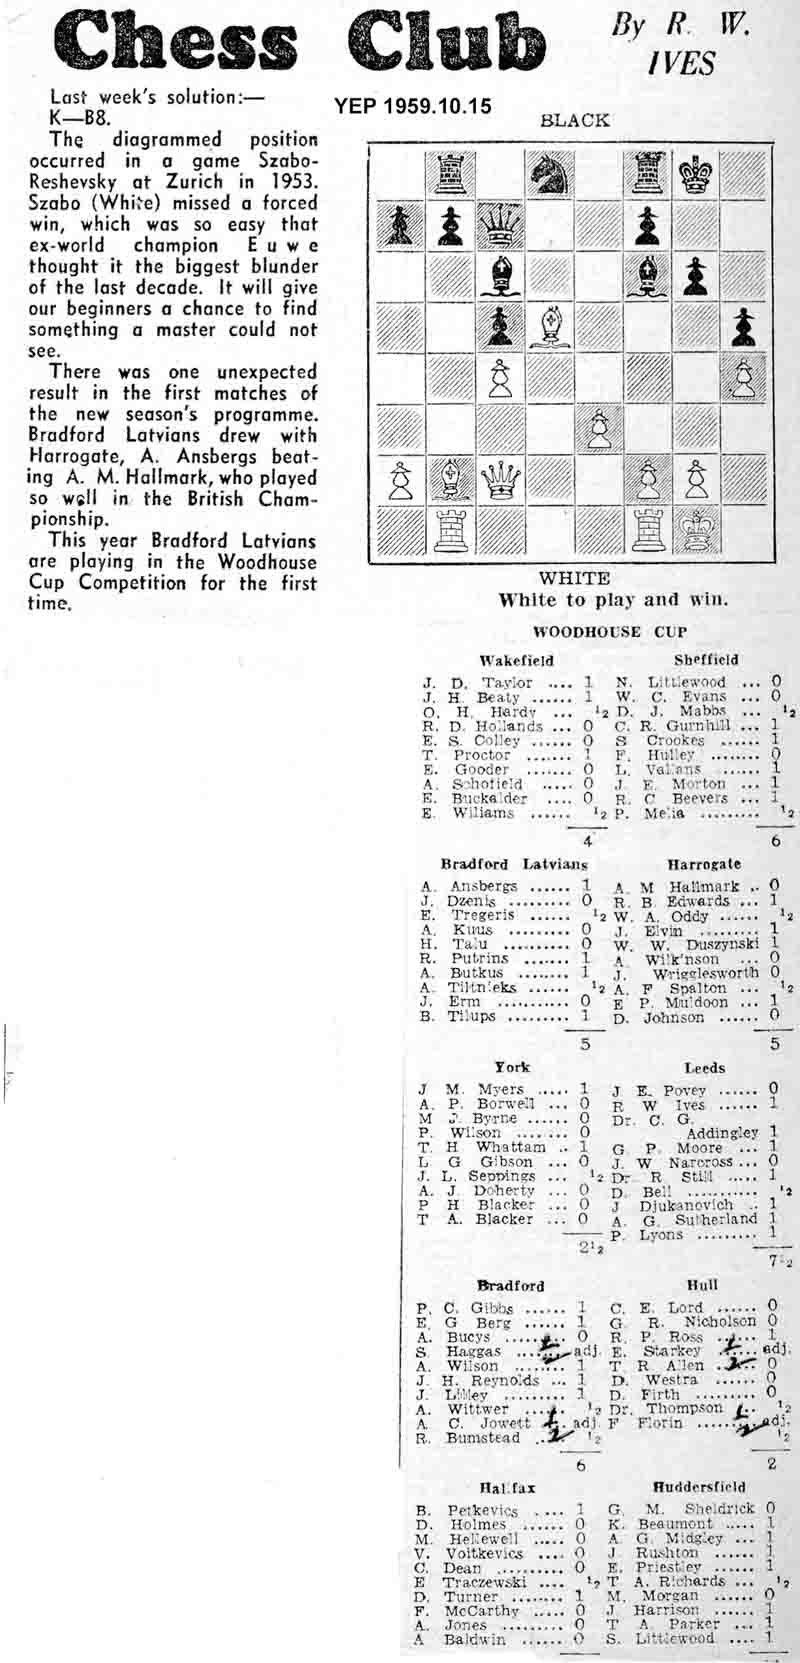 15 October 1959, Yorkshire Evening Post, chess column